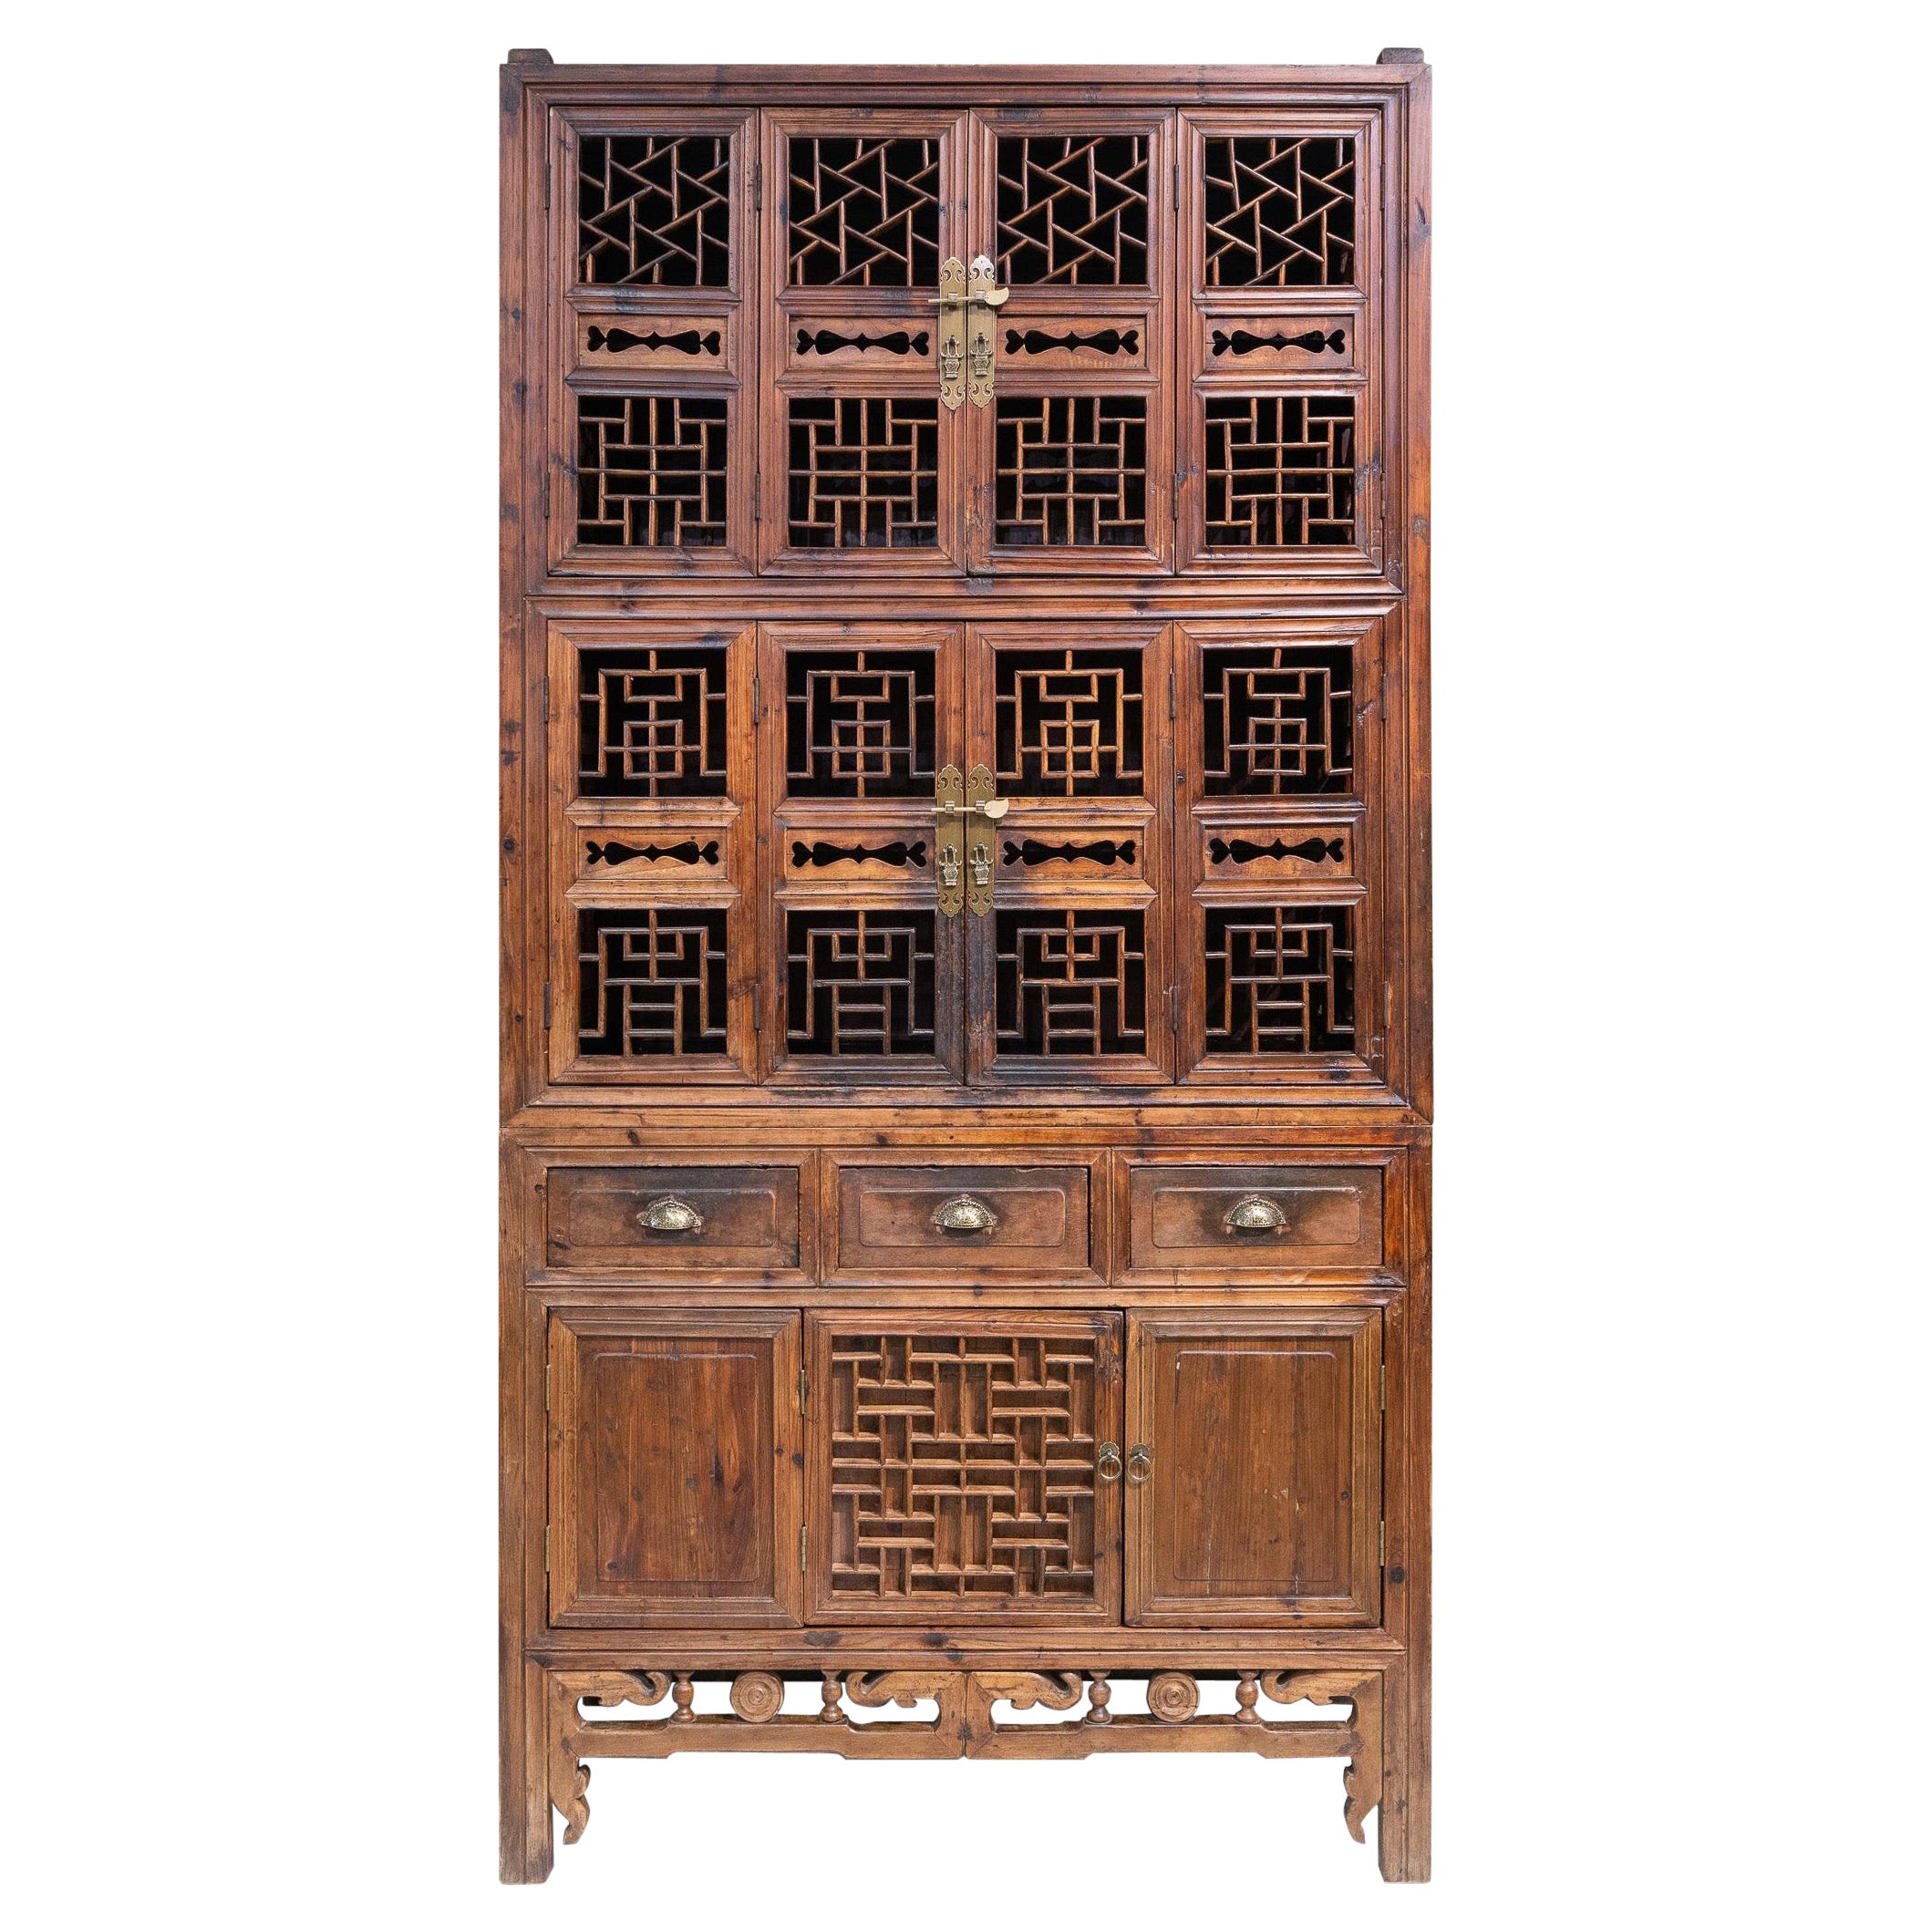 Early 20th Century Tall Zhejiang Kitchen Cabinet